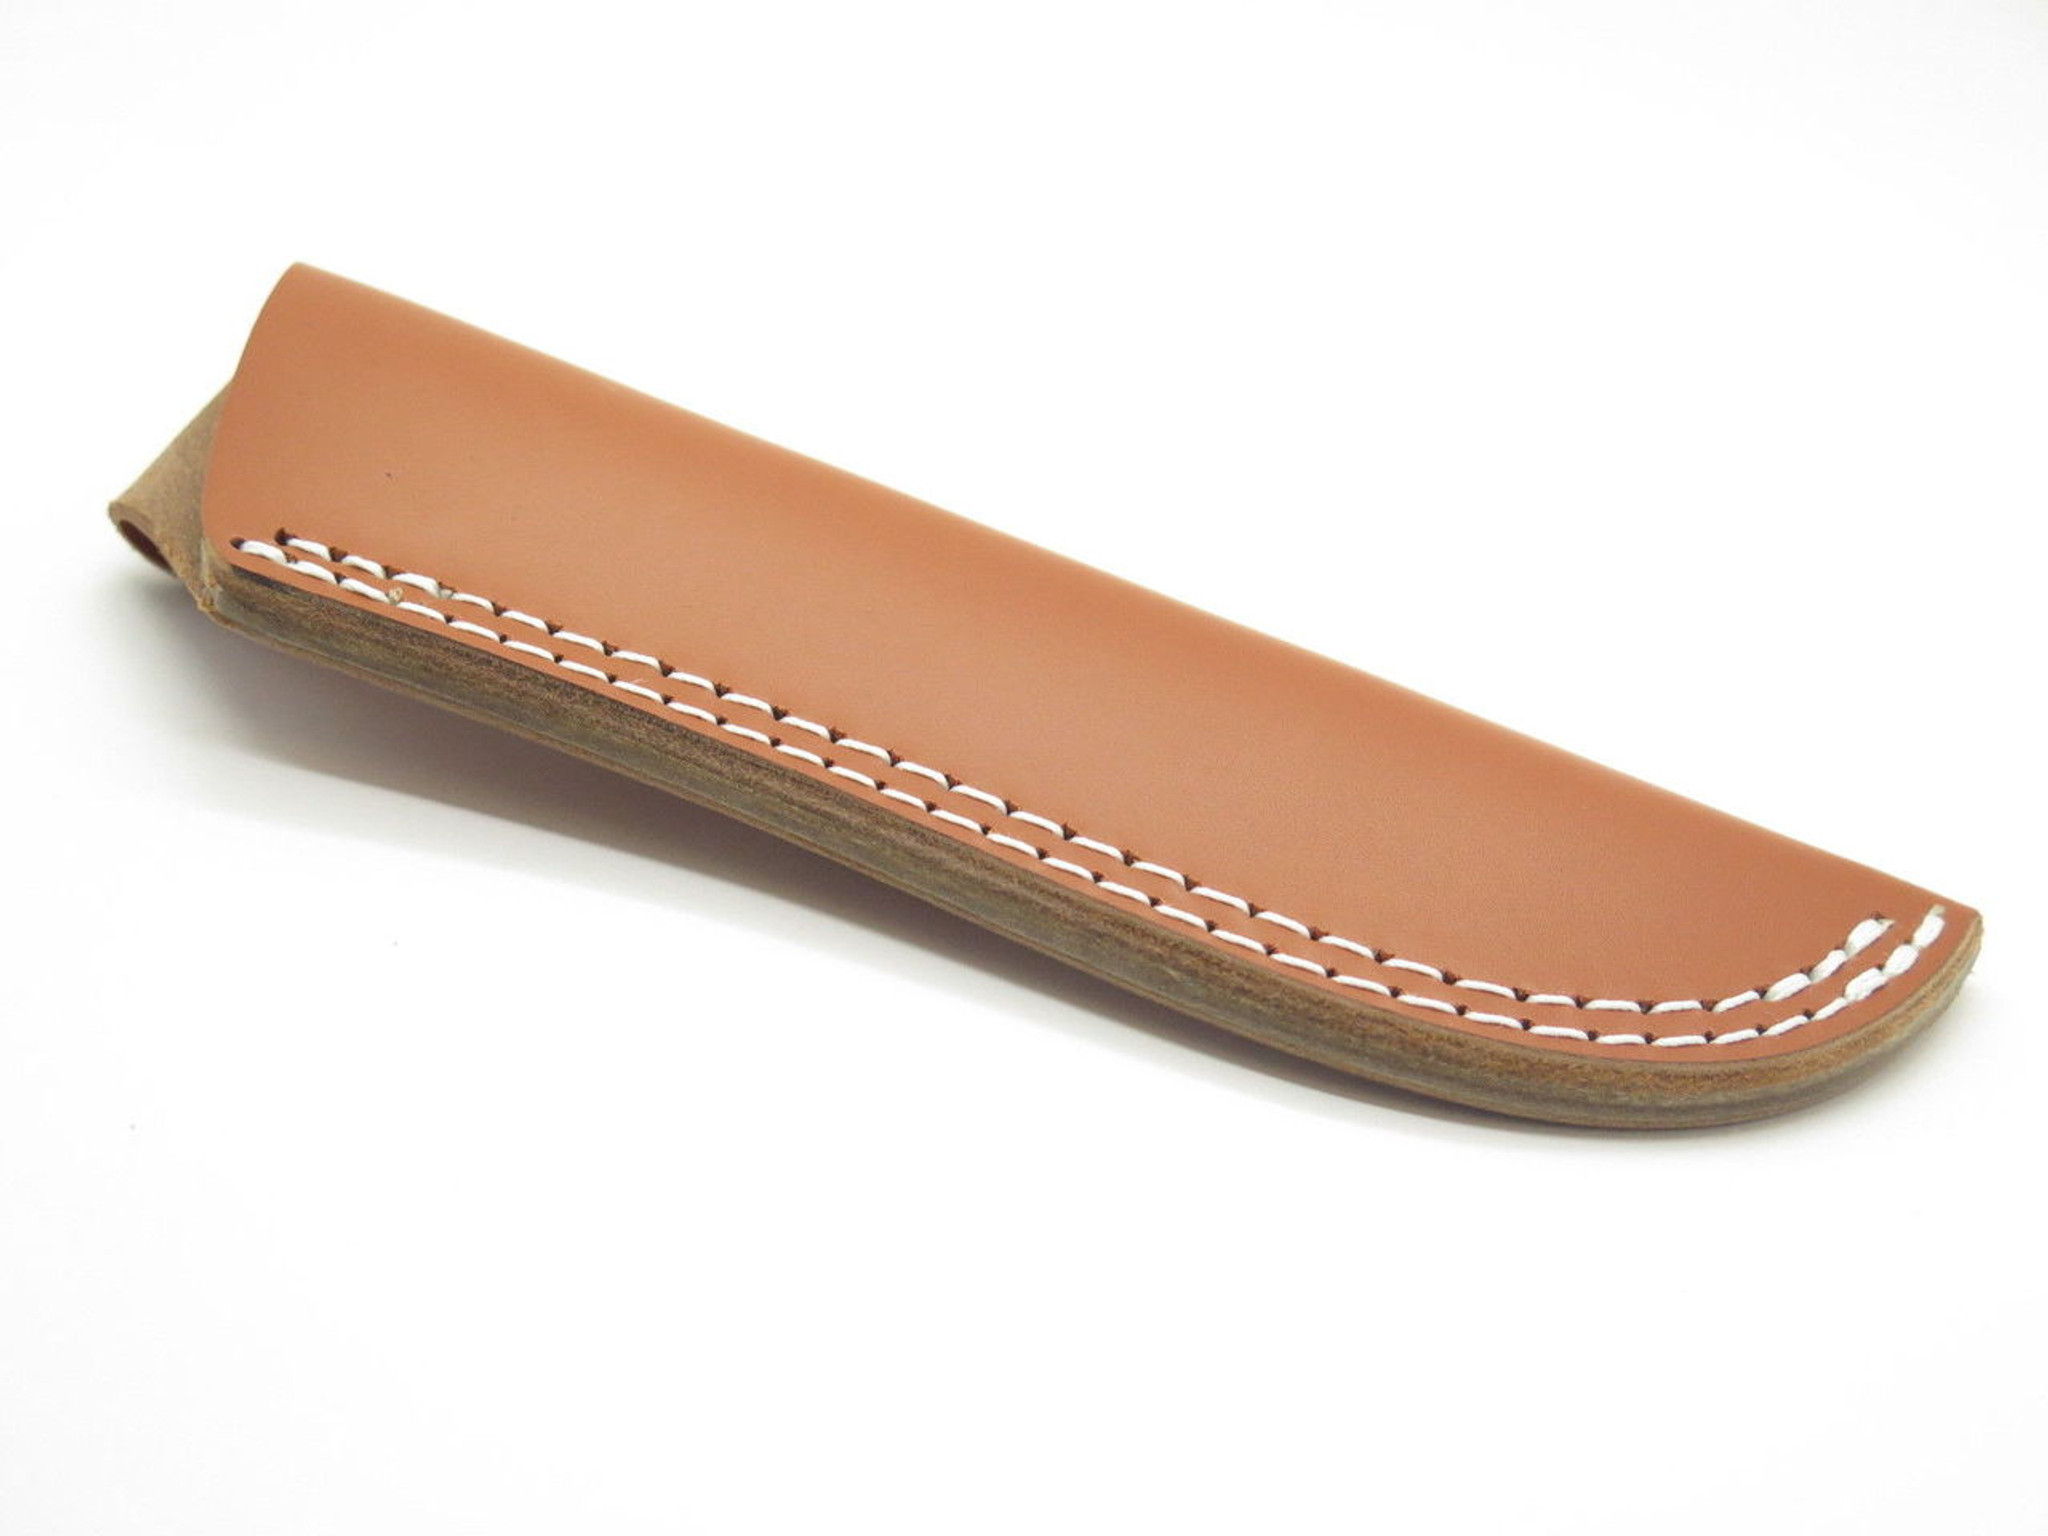 Sheath --- Leather - Brown - (4.75 inch blades)